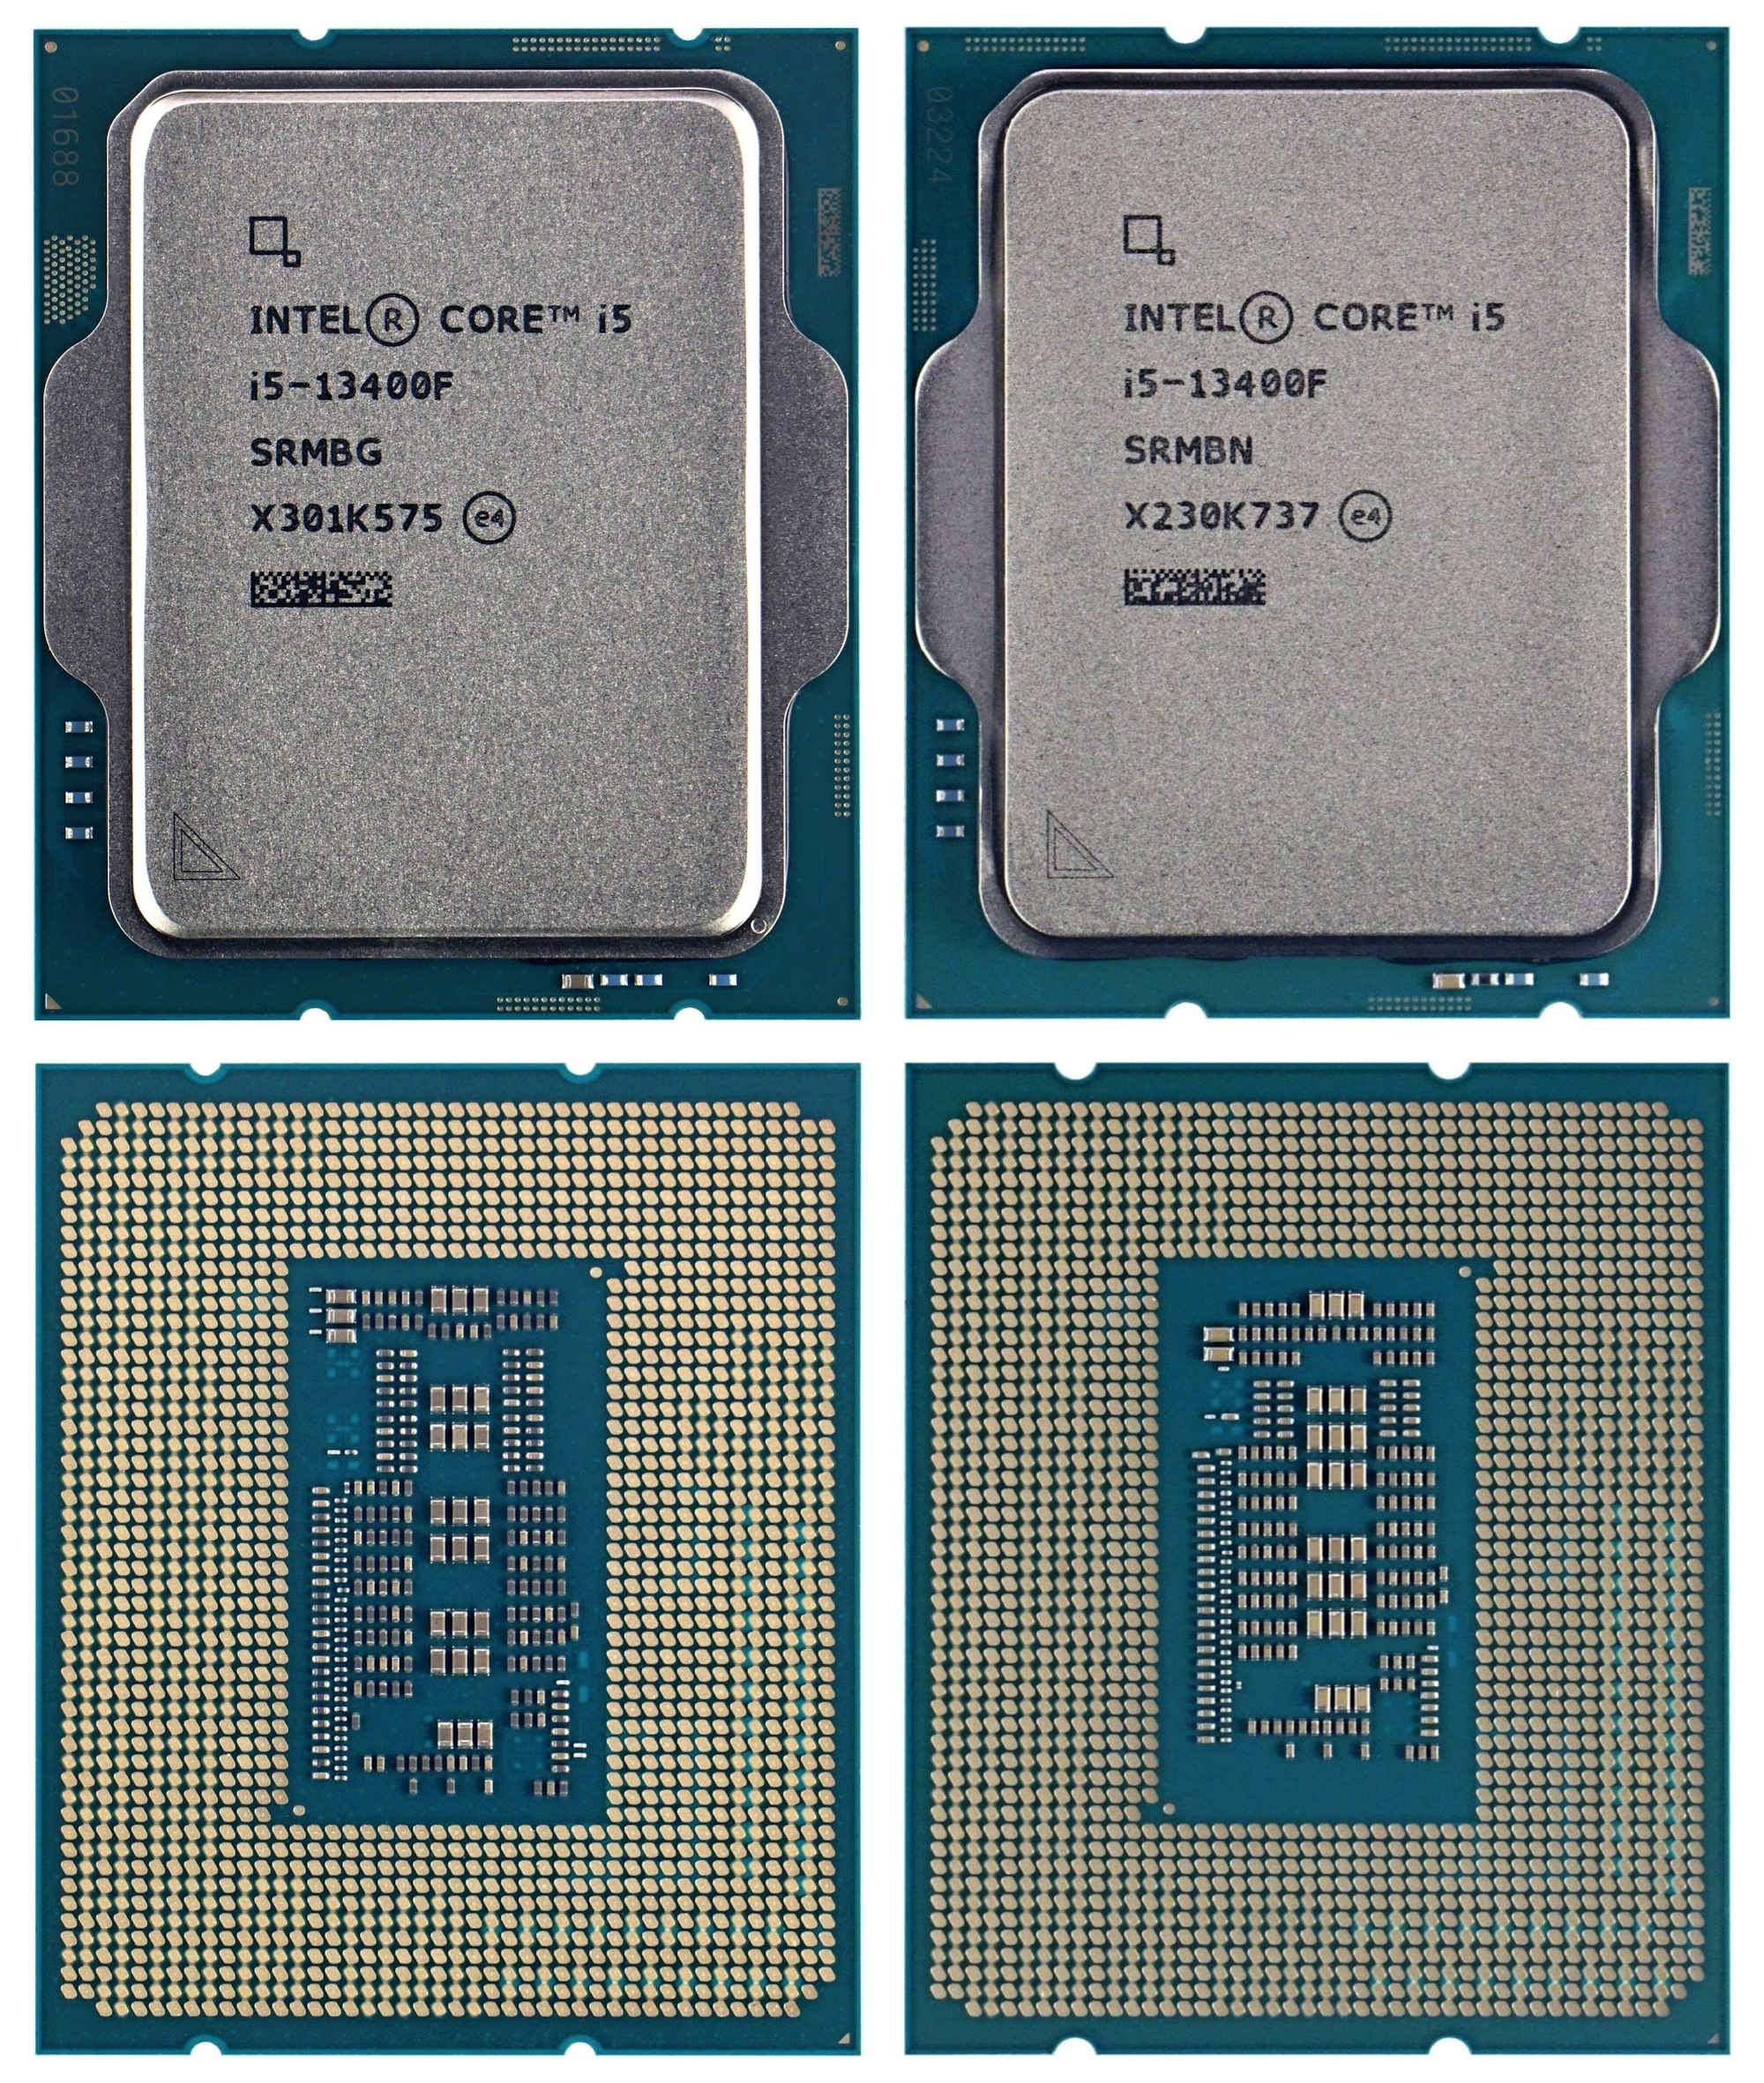 intel-core-i5-13400f-b0-vs-c0-stepping-01_.jpg